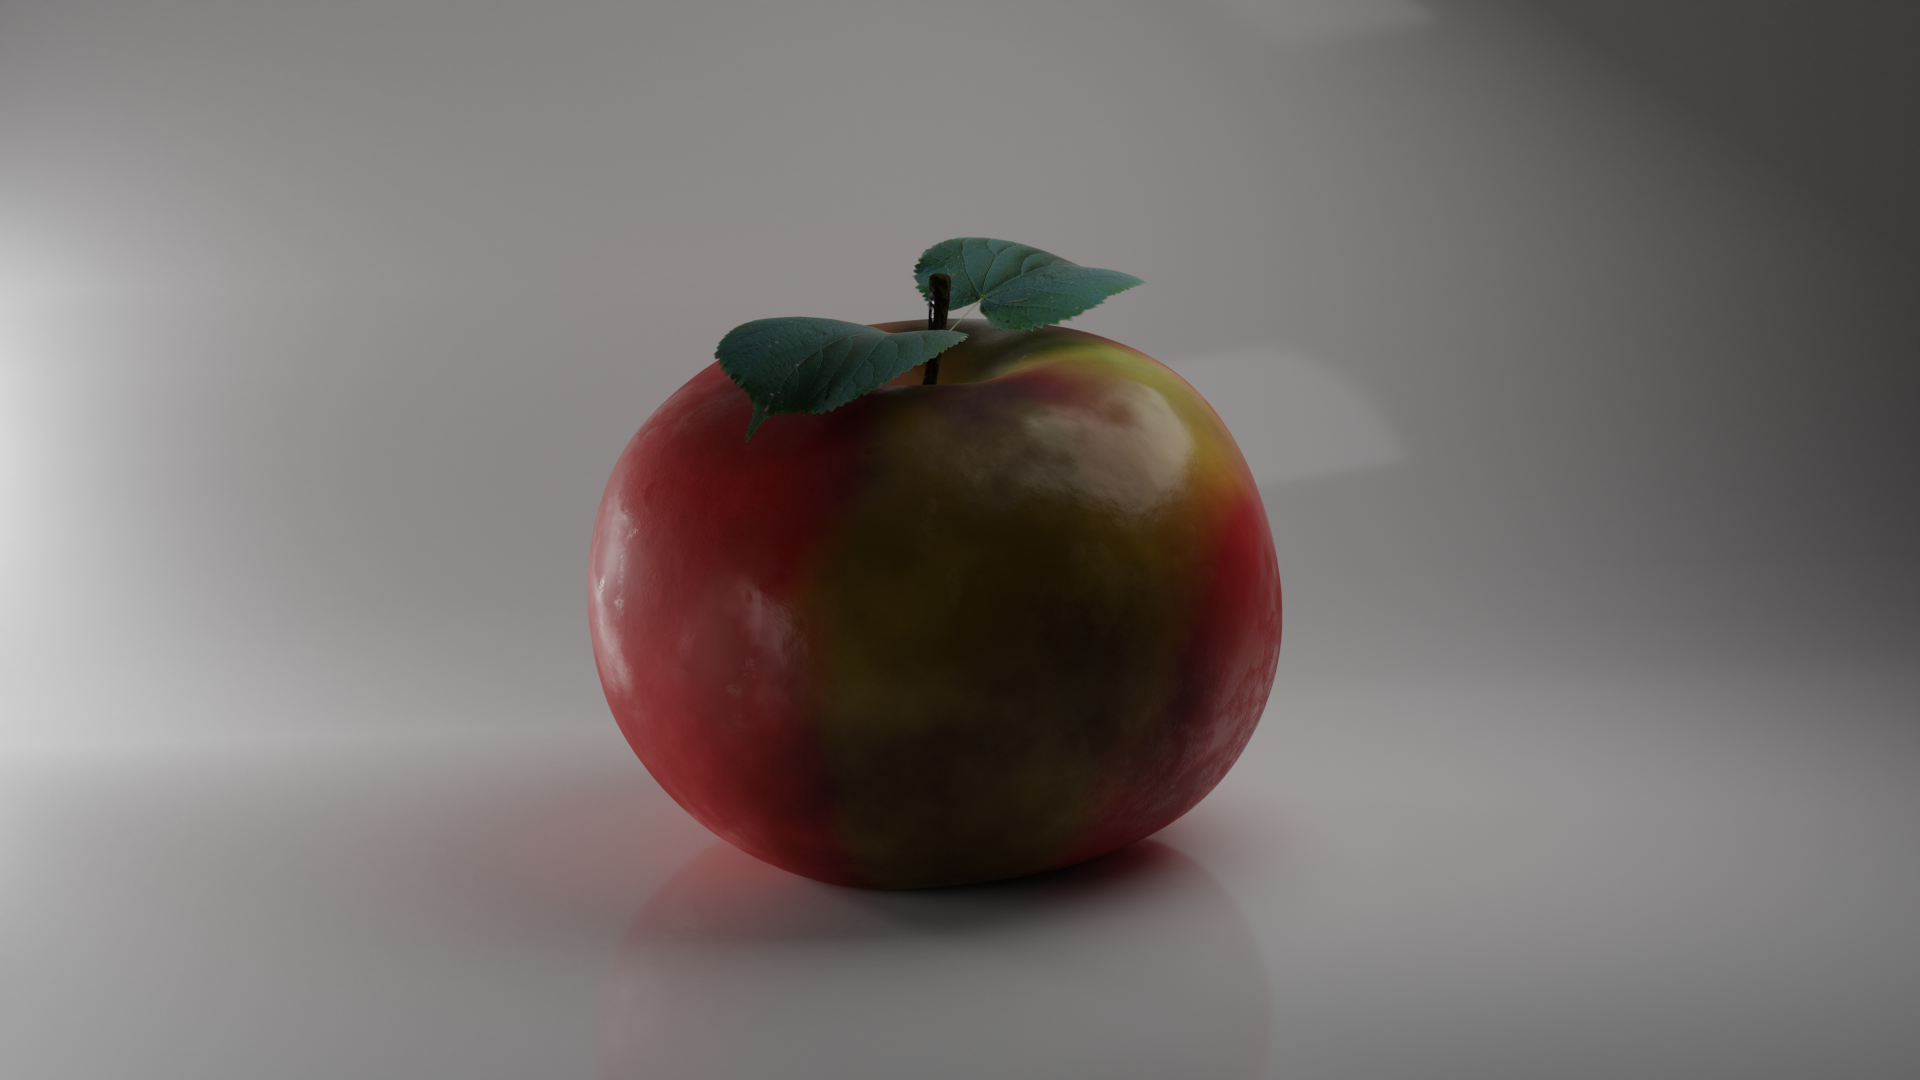 General 1920x1080 CGI digital art apples